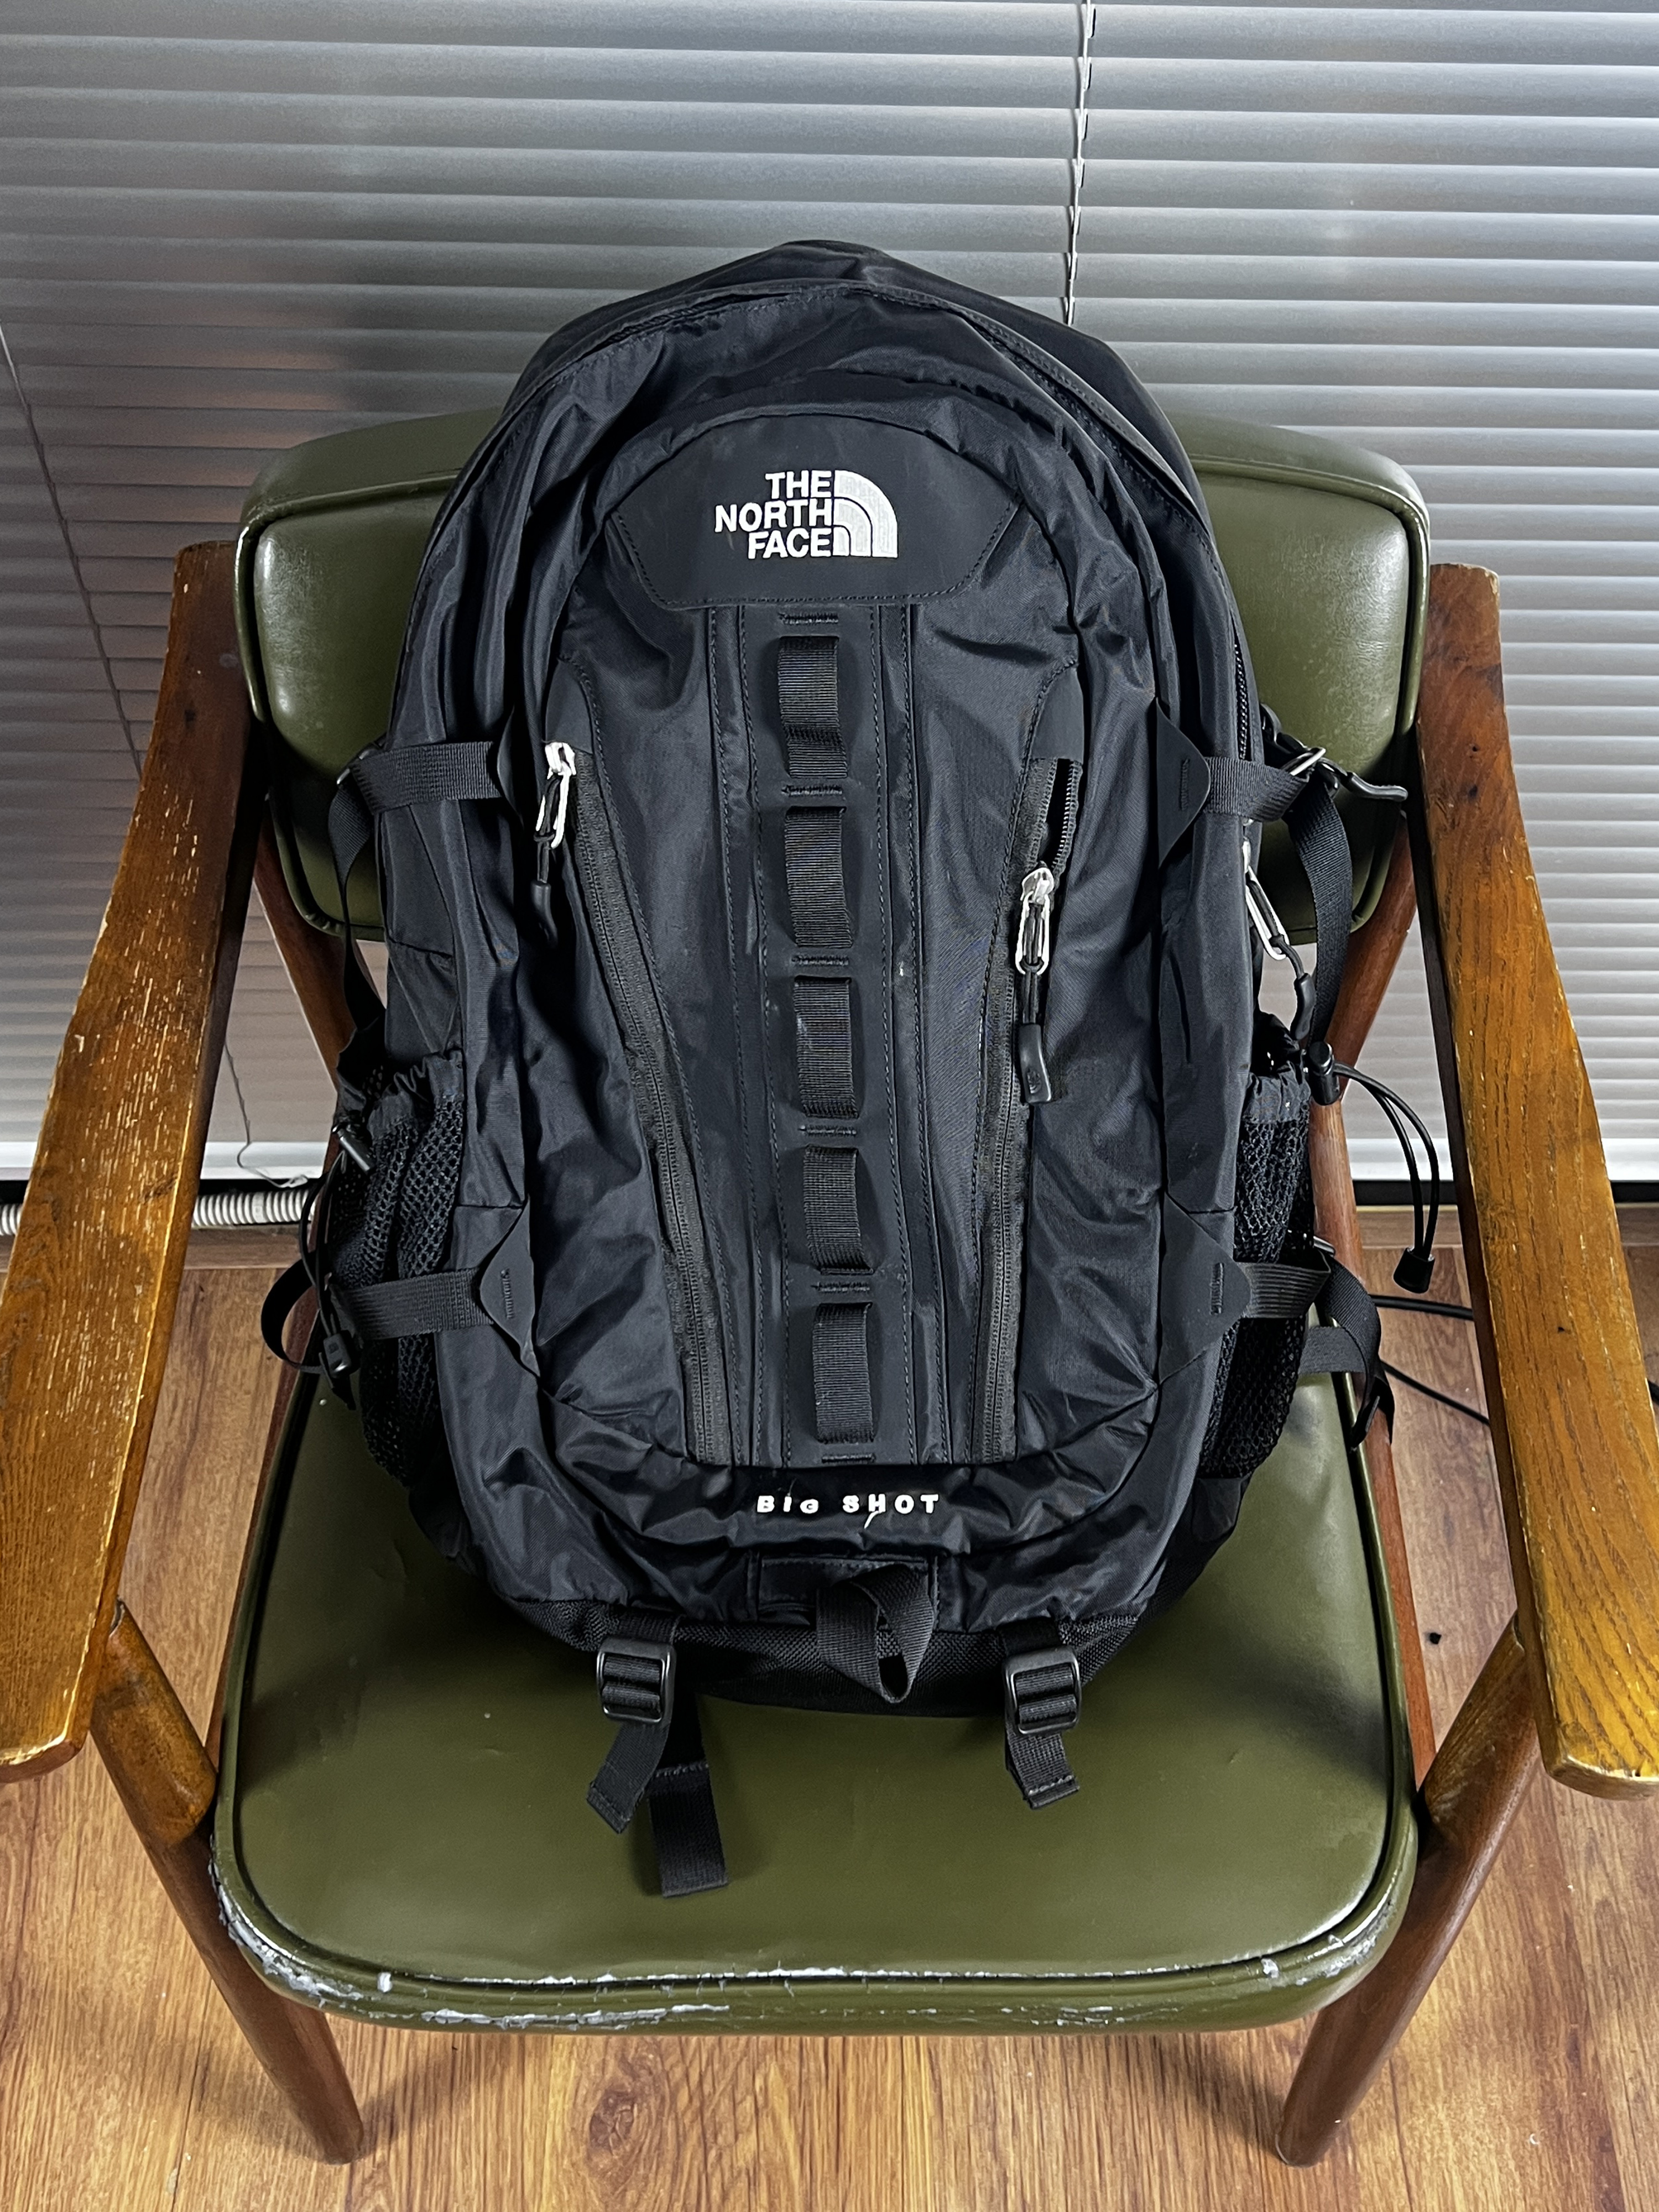 TNF big shot backpack